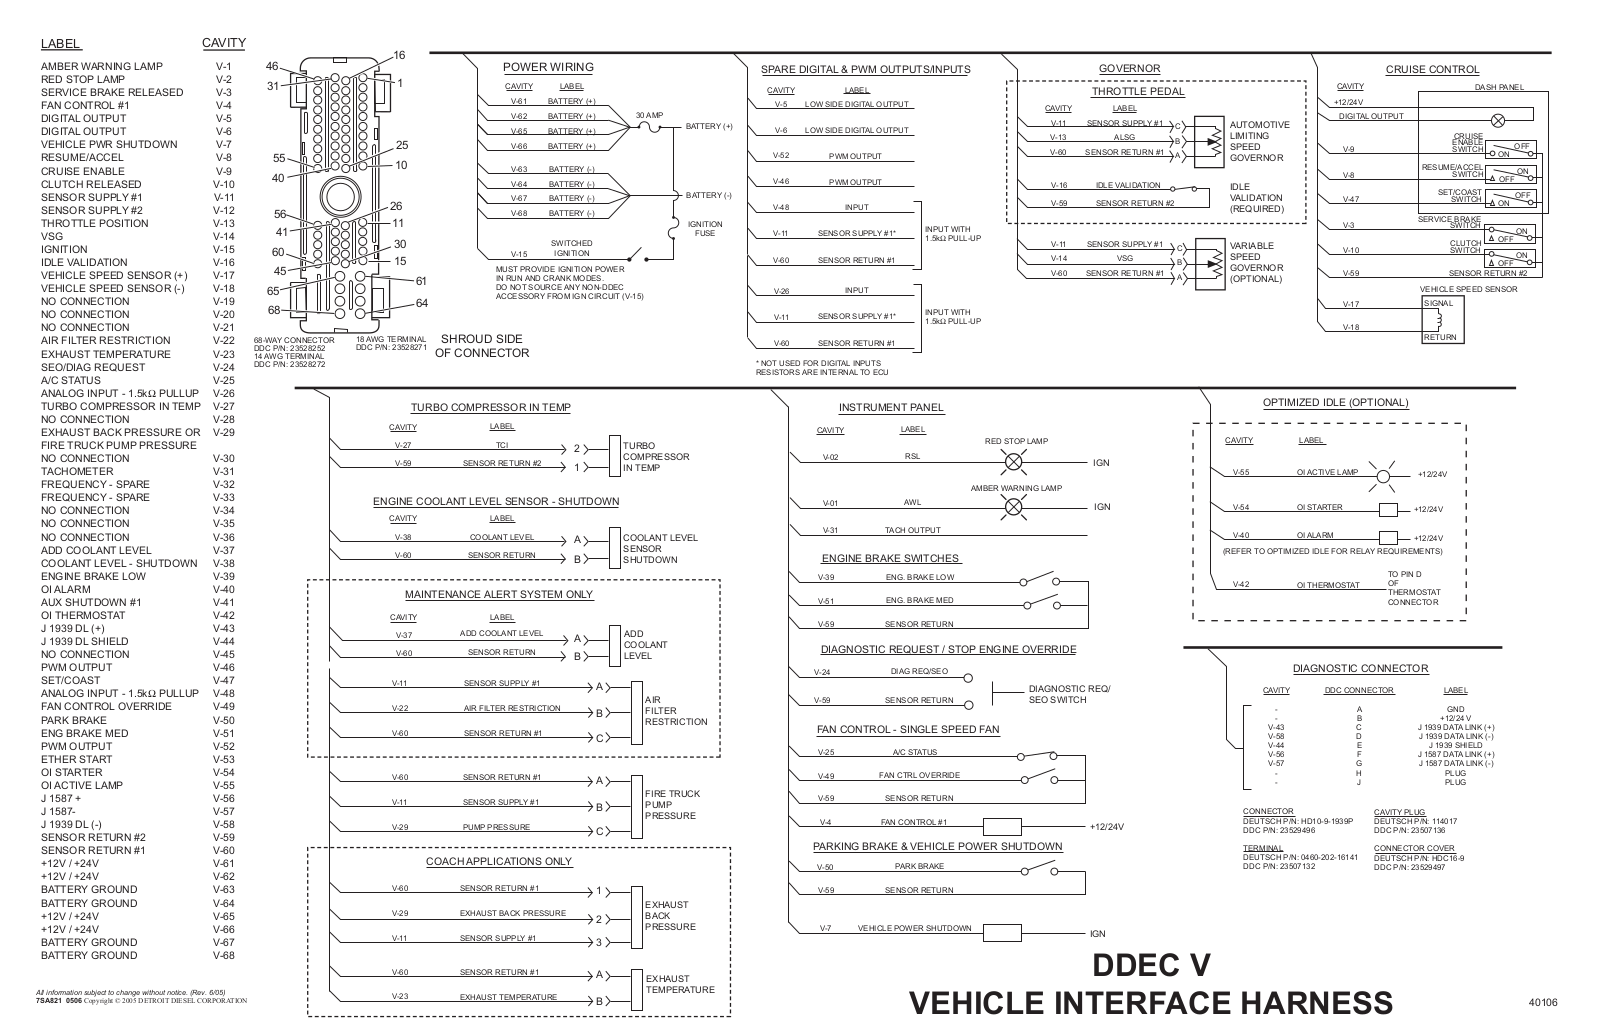 Detroit Diesel Engine DDEC V Wiring diagrams